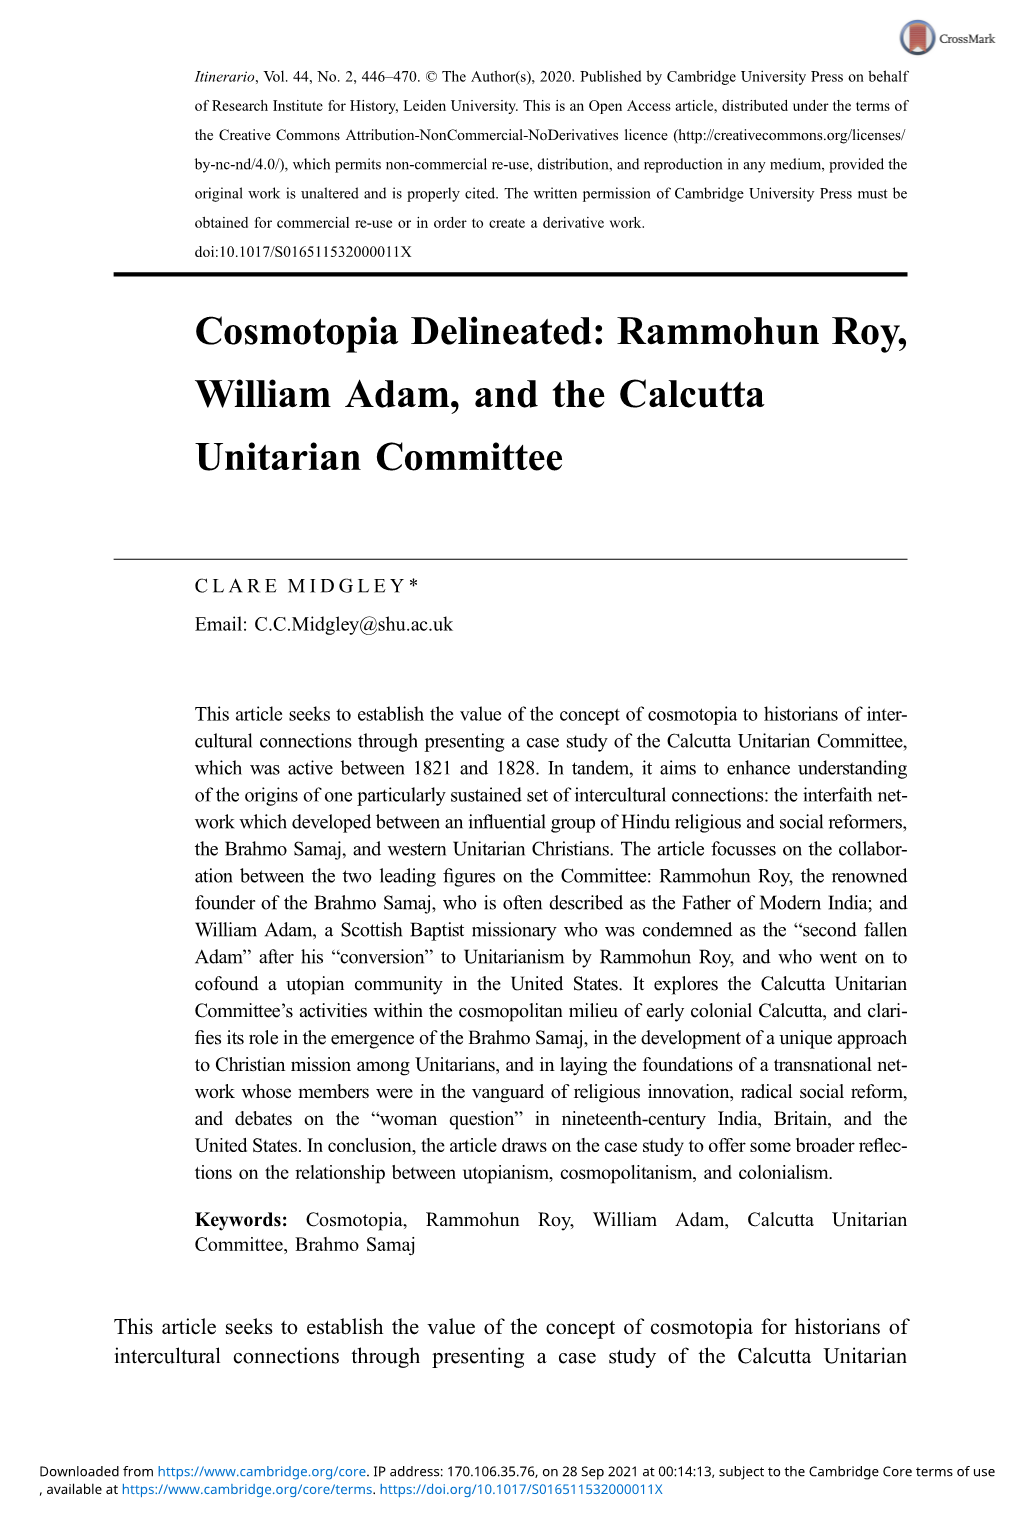 Cosmotopia Delineated: Rammohun Roy, William Adam, and the Calcutta Unitarian Committee